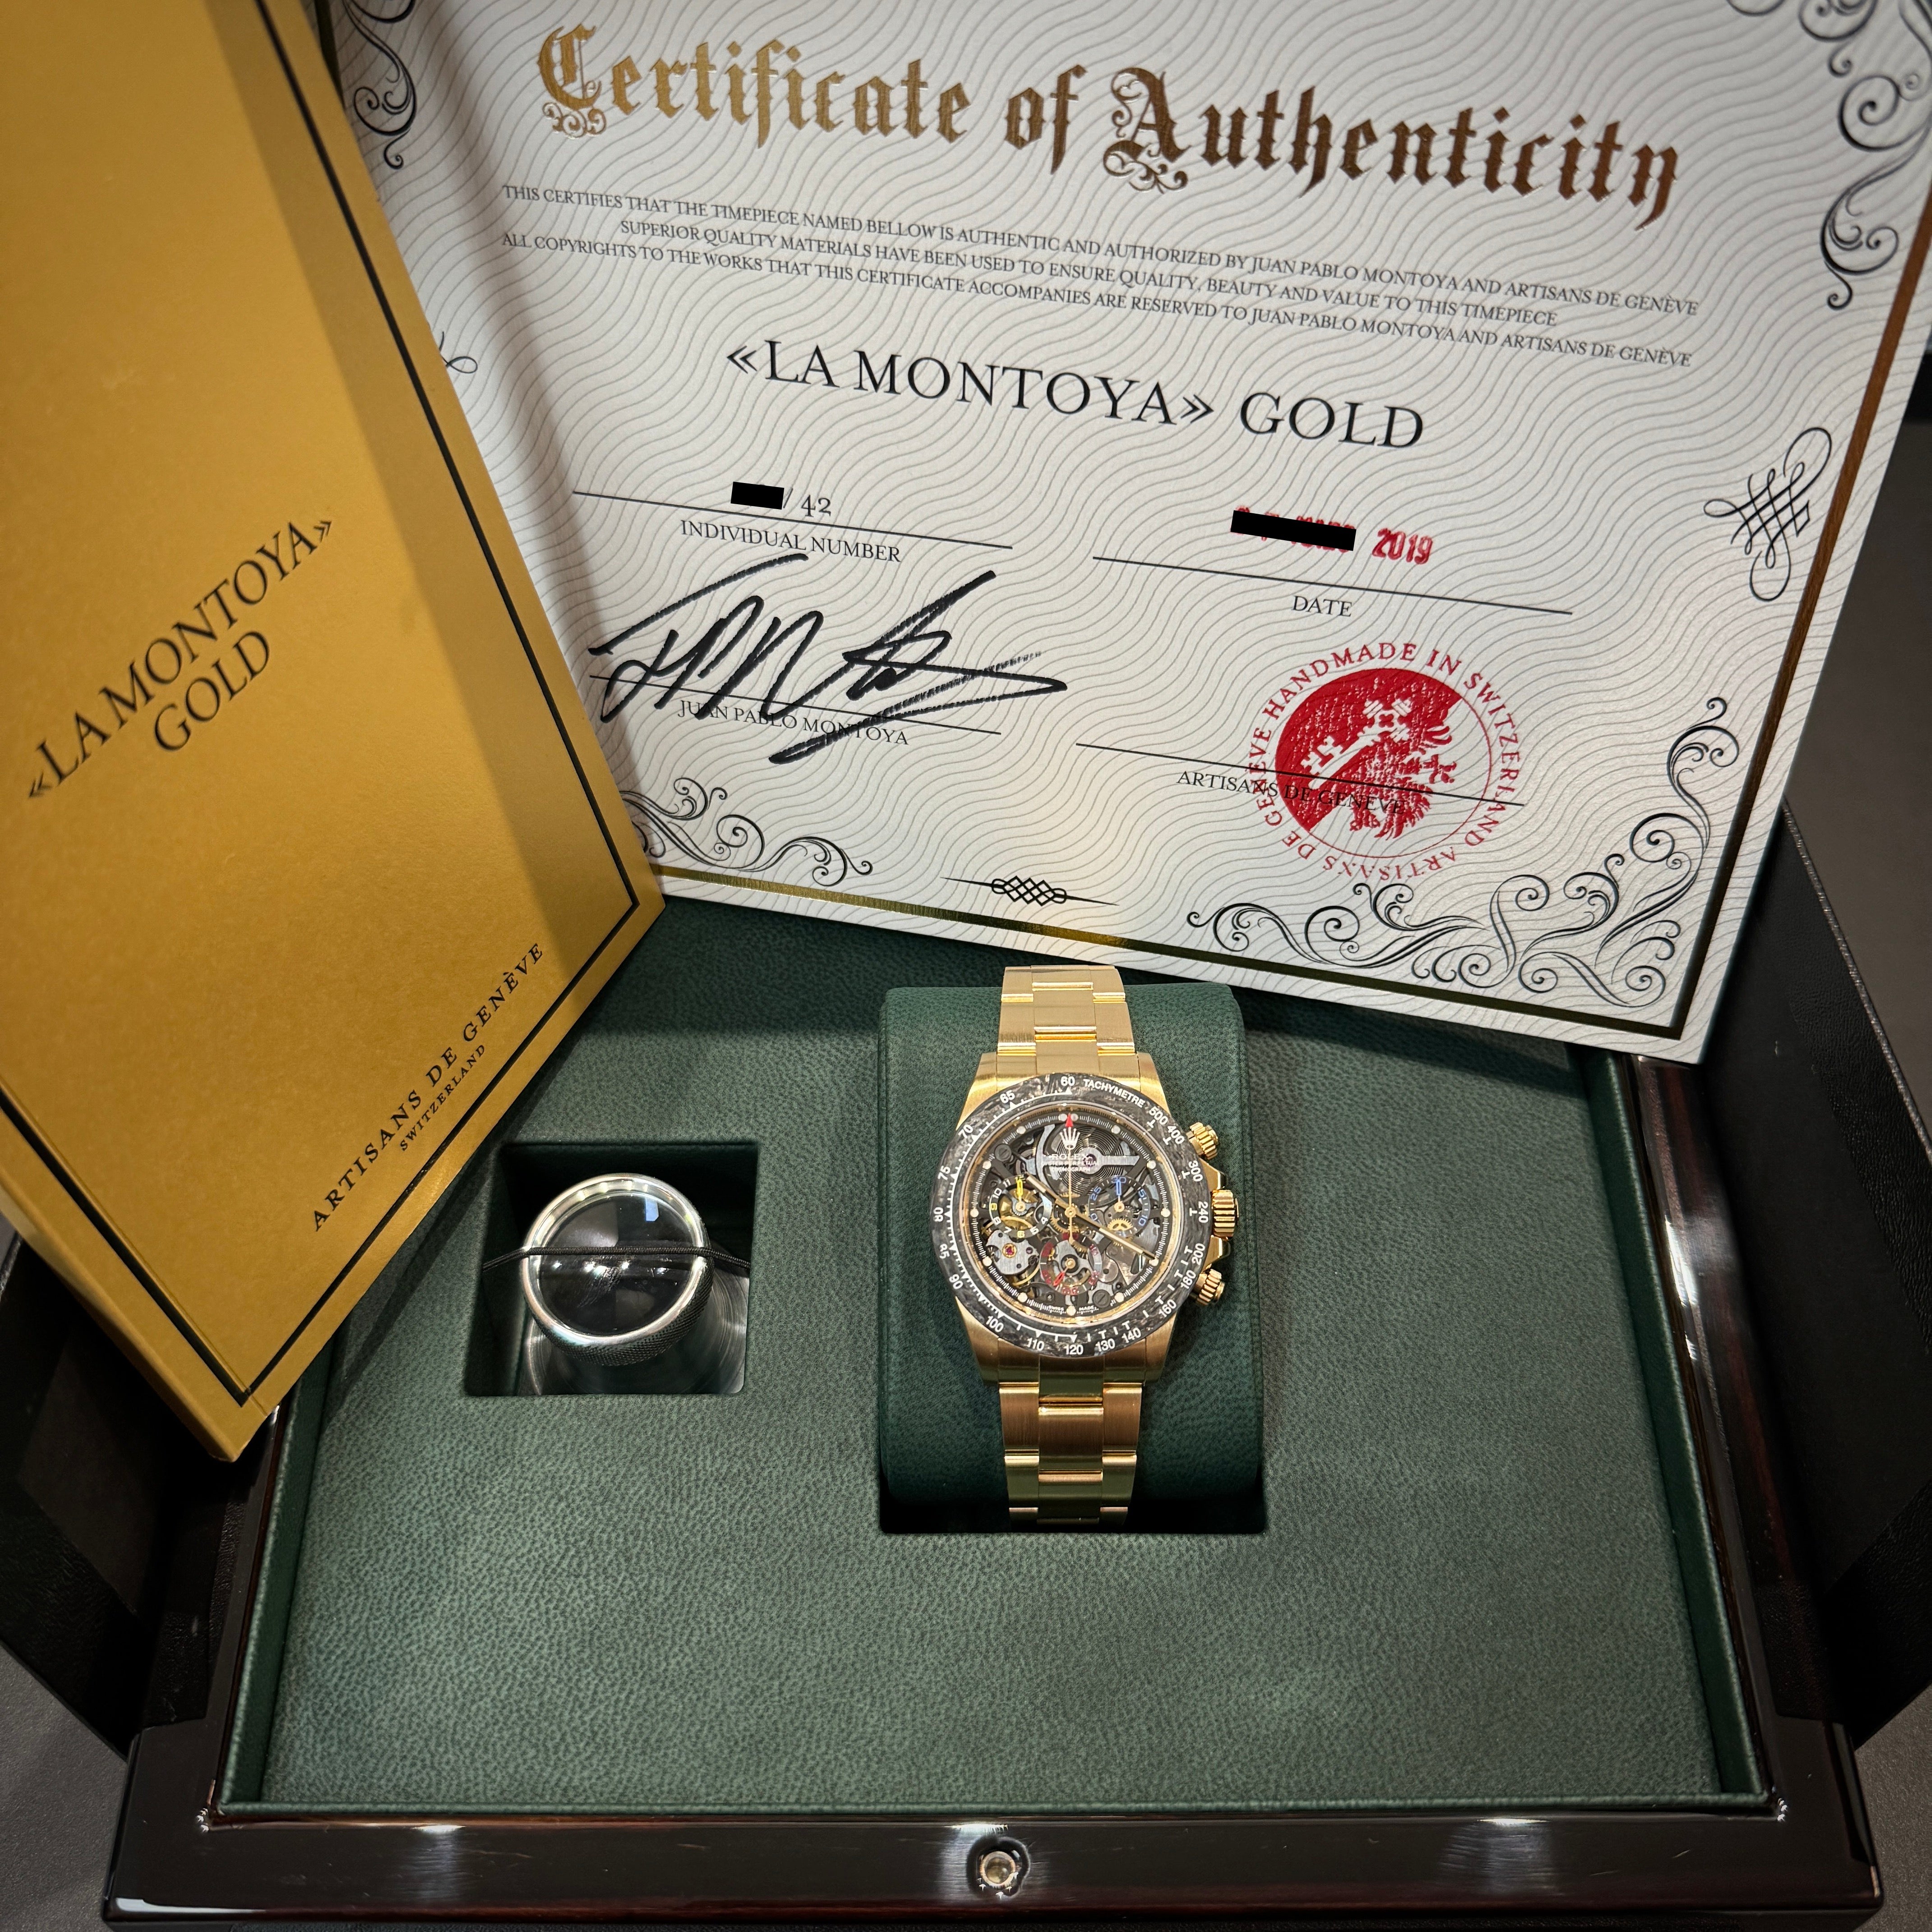 Rolex Daytona La Montoya Gold "Artisans De Geneve"